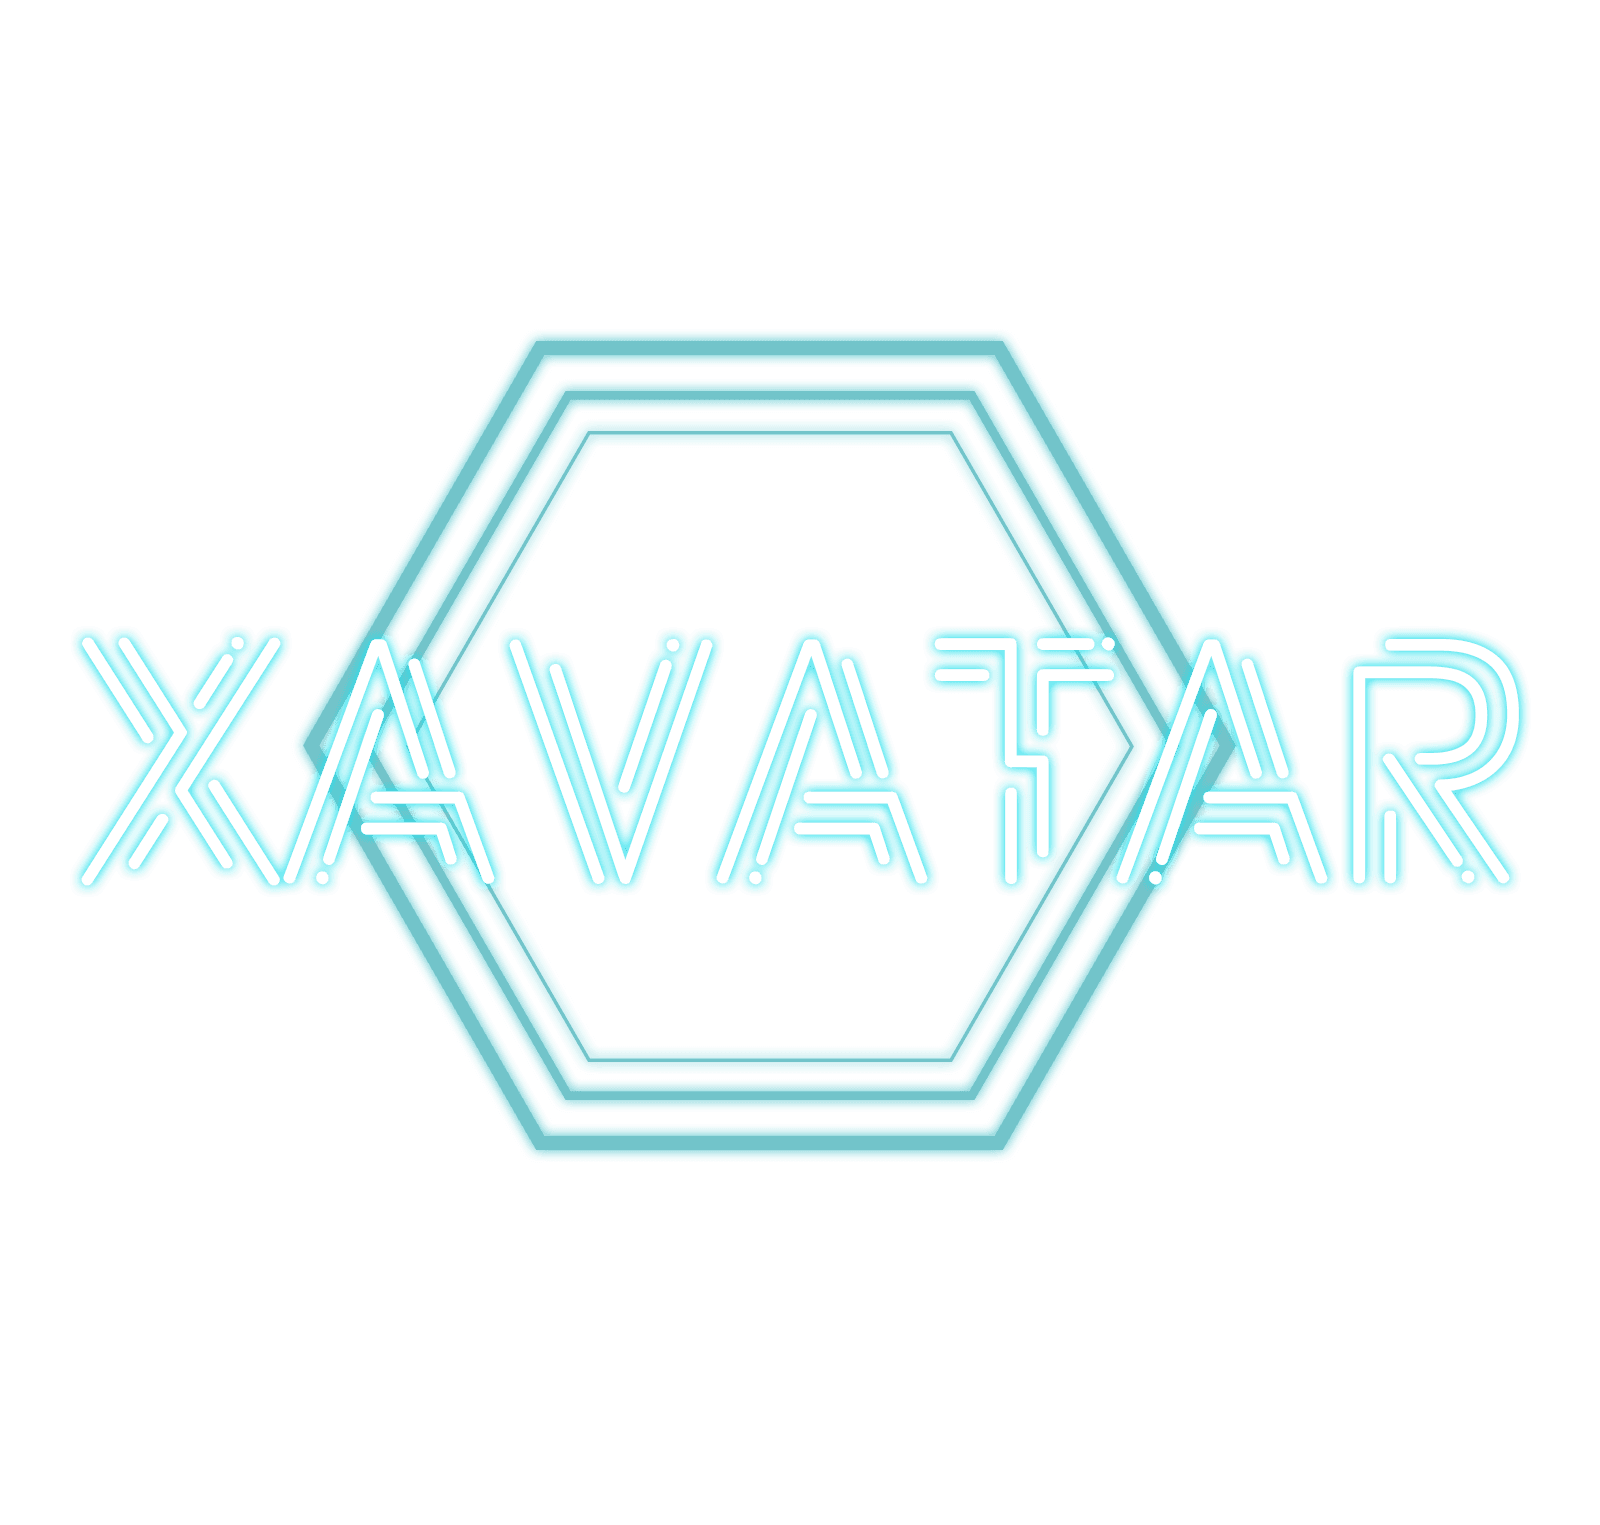 XavatarLtd banner